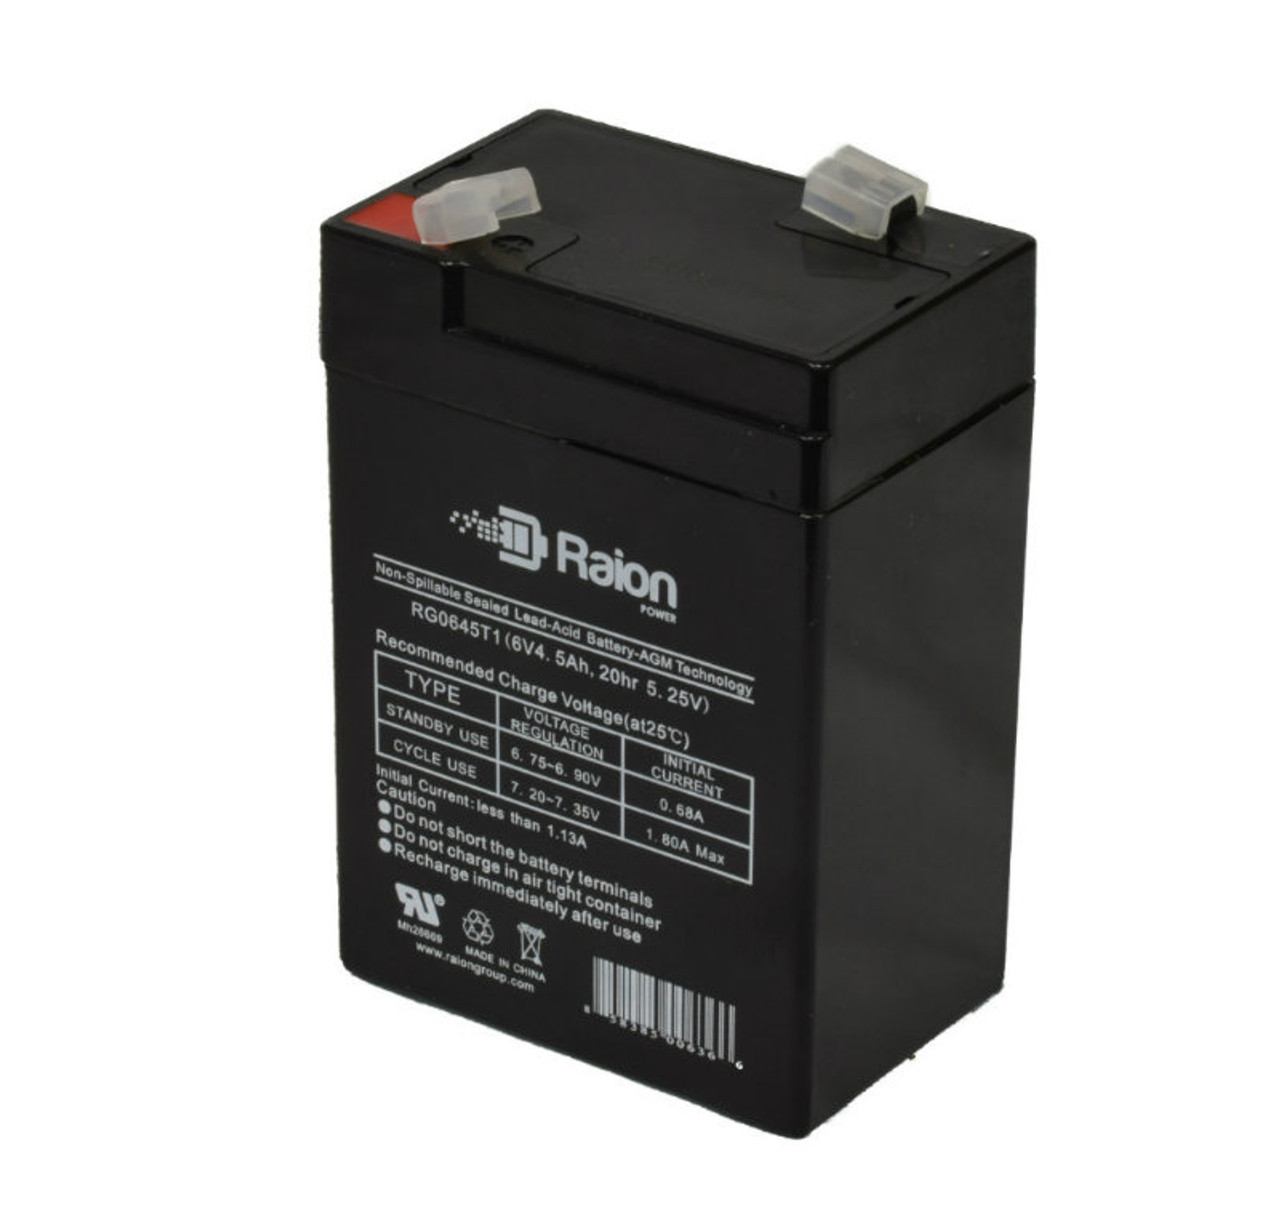 Raion Power RG0645T1 6V 4.5Ah Replacement Battery Cartridge for Chloride CSU6D